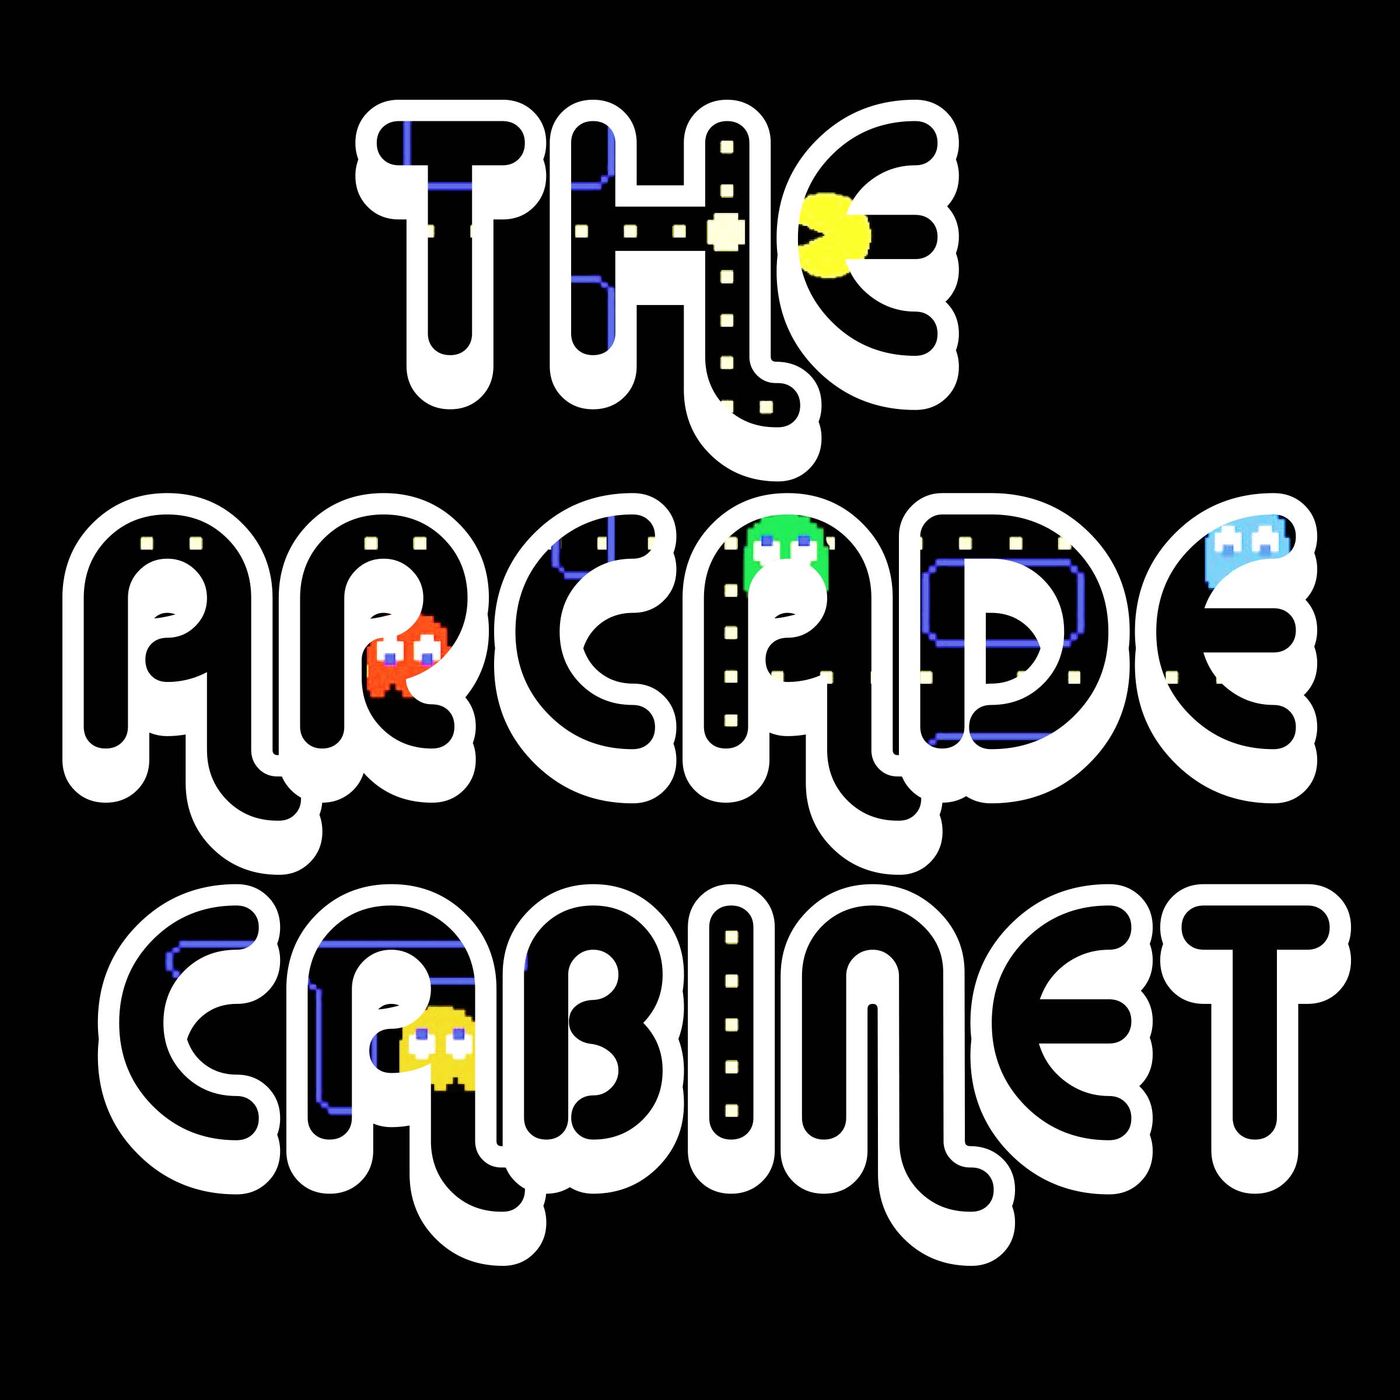 Arcade Cabinet discuss console wars